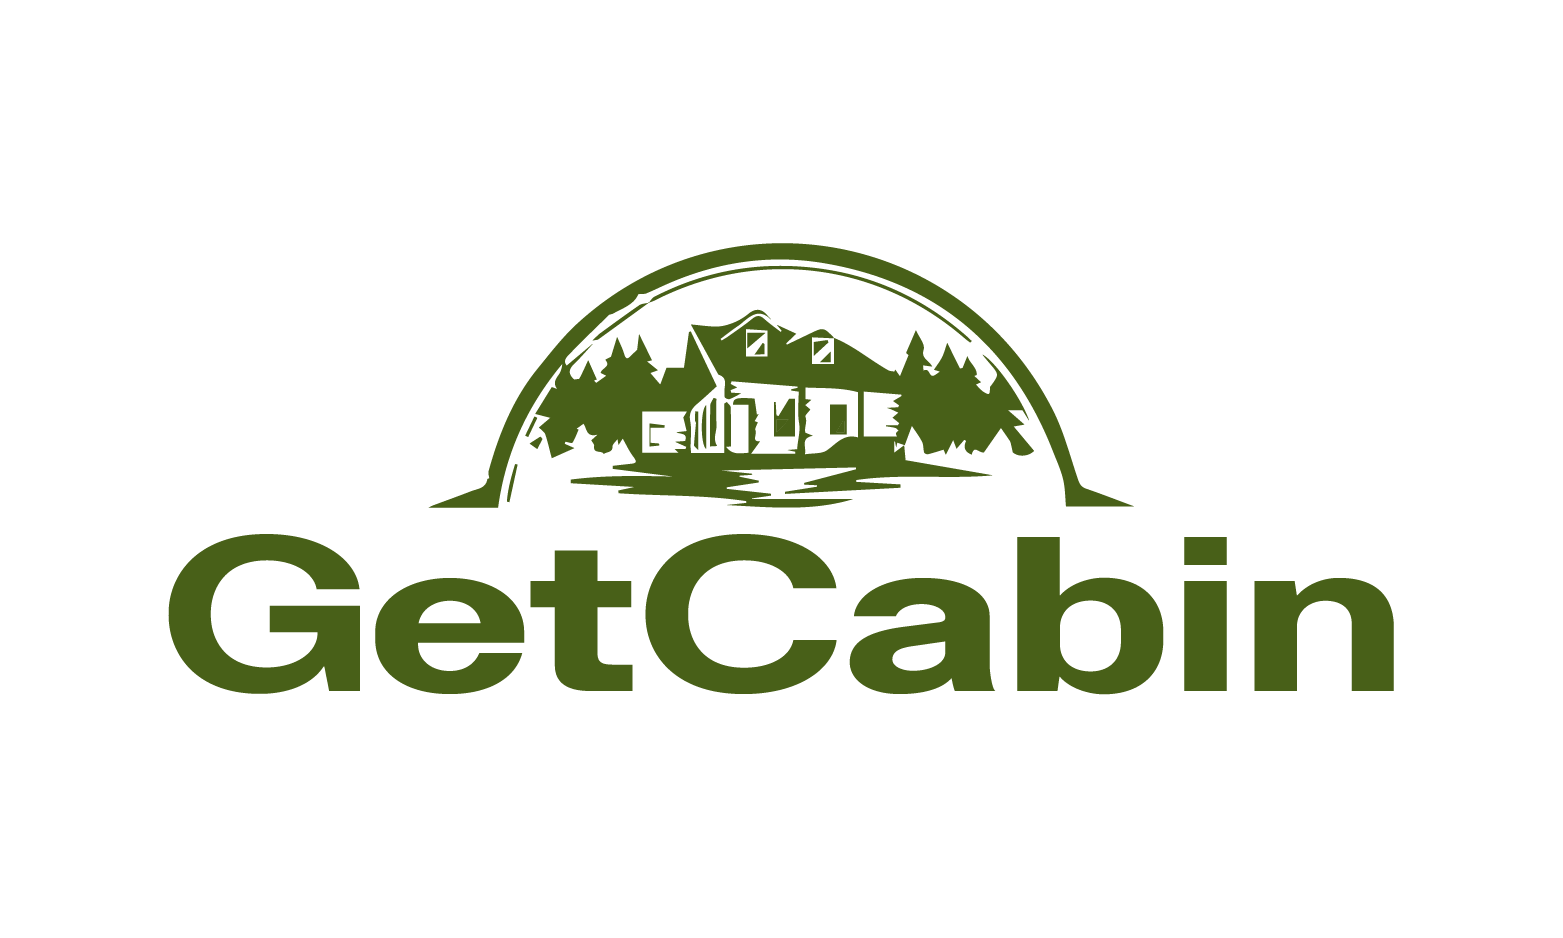 GetCabin.com - Creative brandable domain for sale